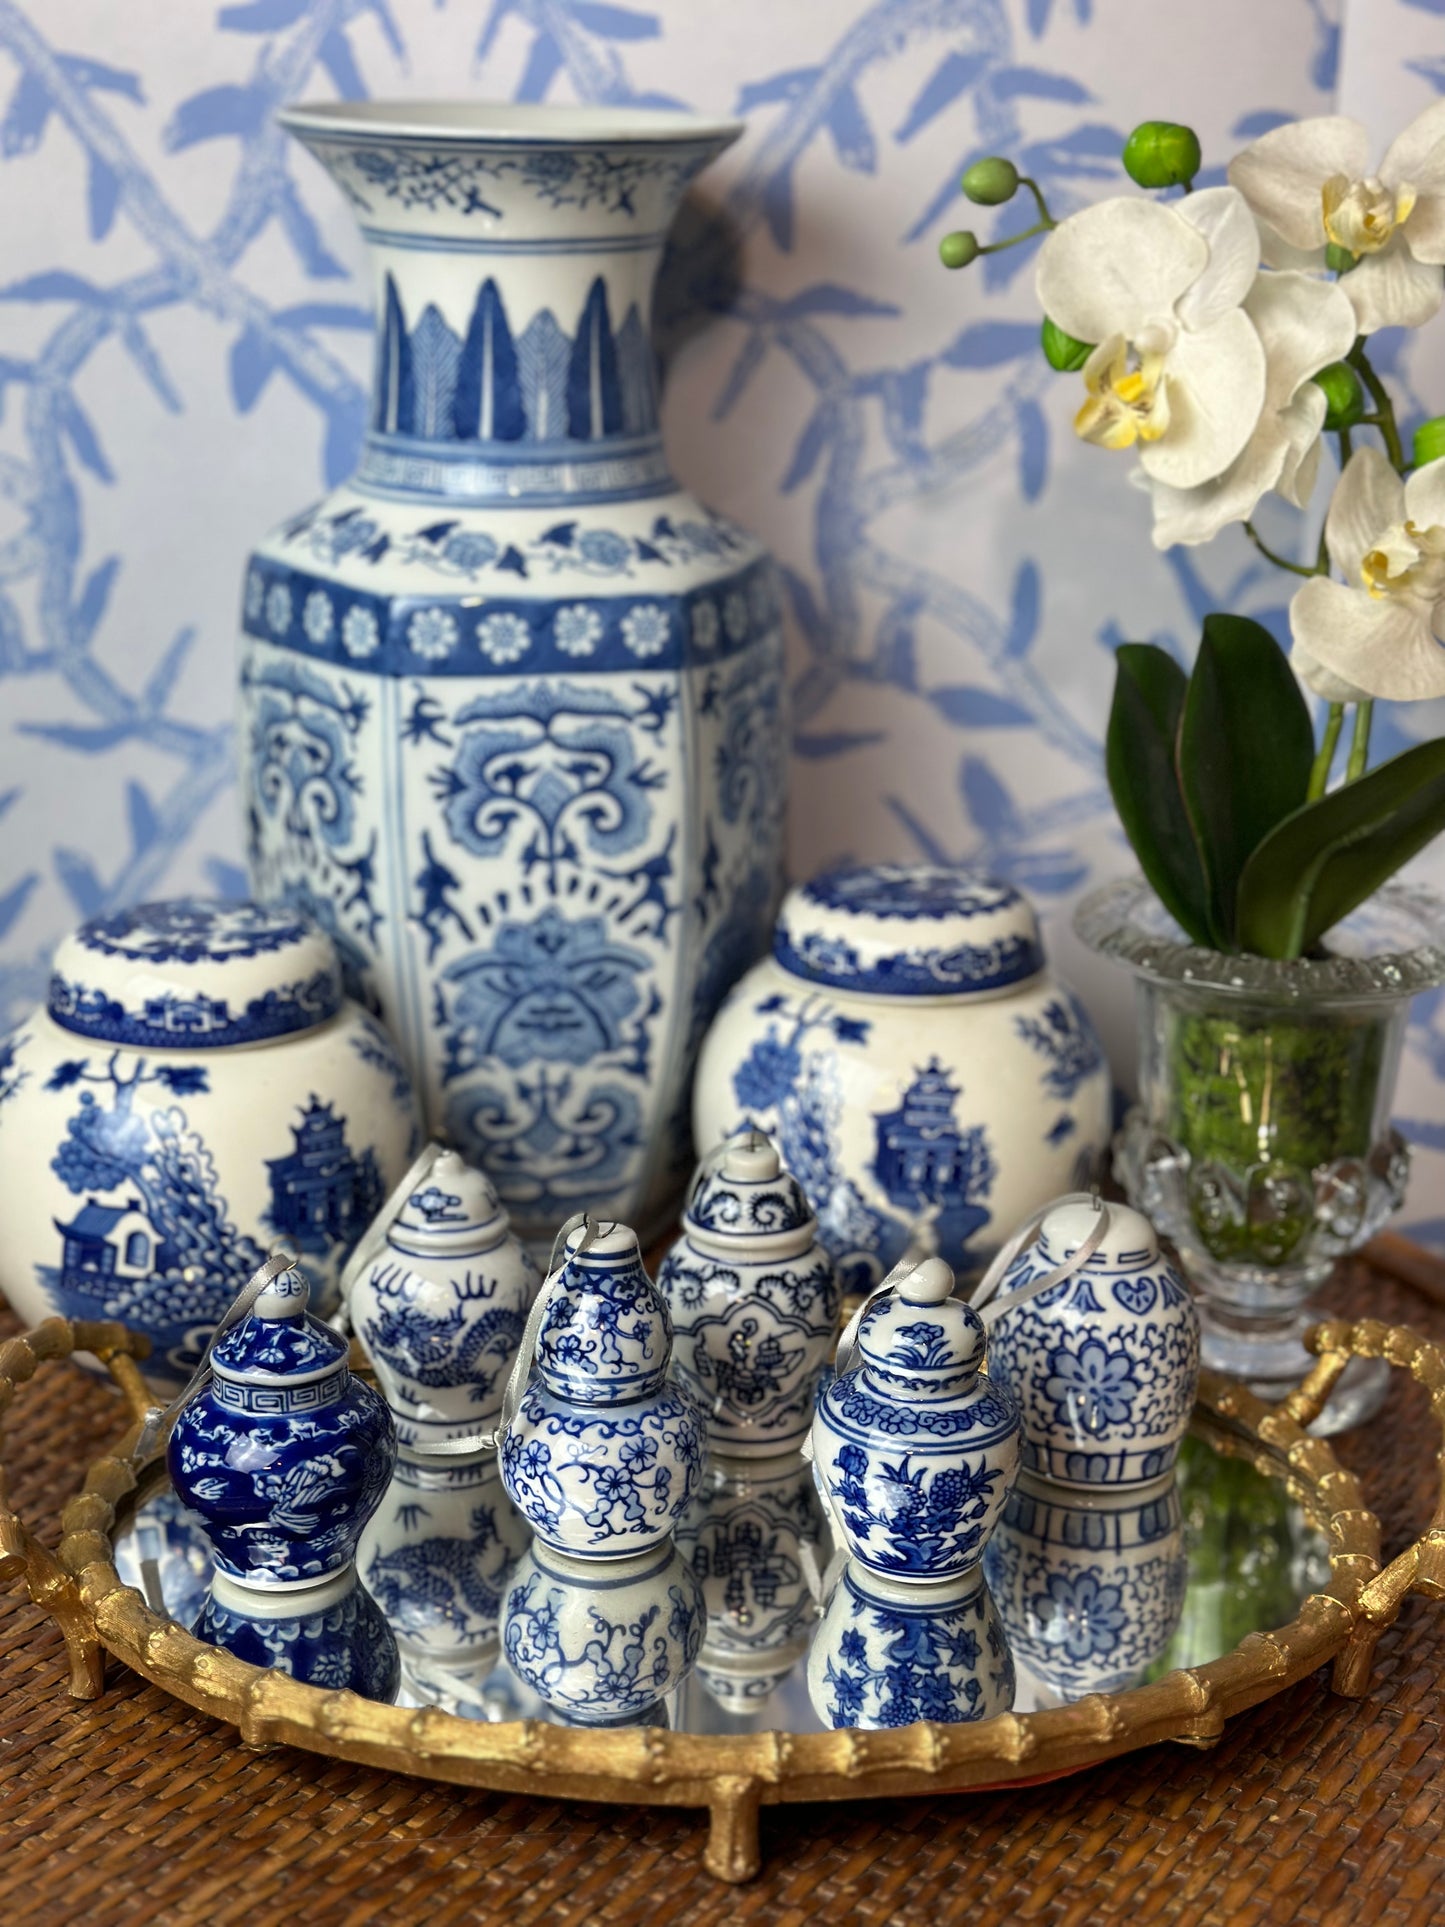 PRE-SALE, (6) Blue & White Chinoiserie Jars Porcelain Ornament Set, 3.5" Tall